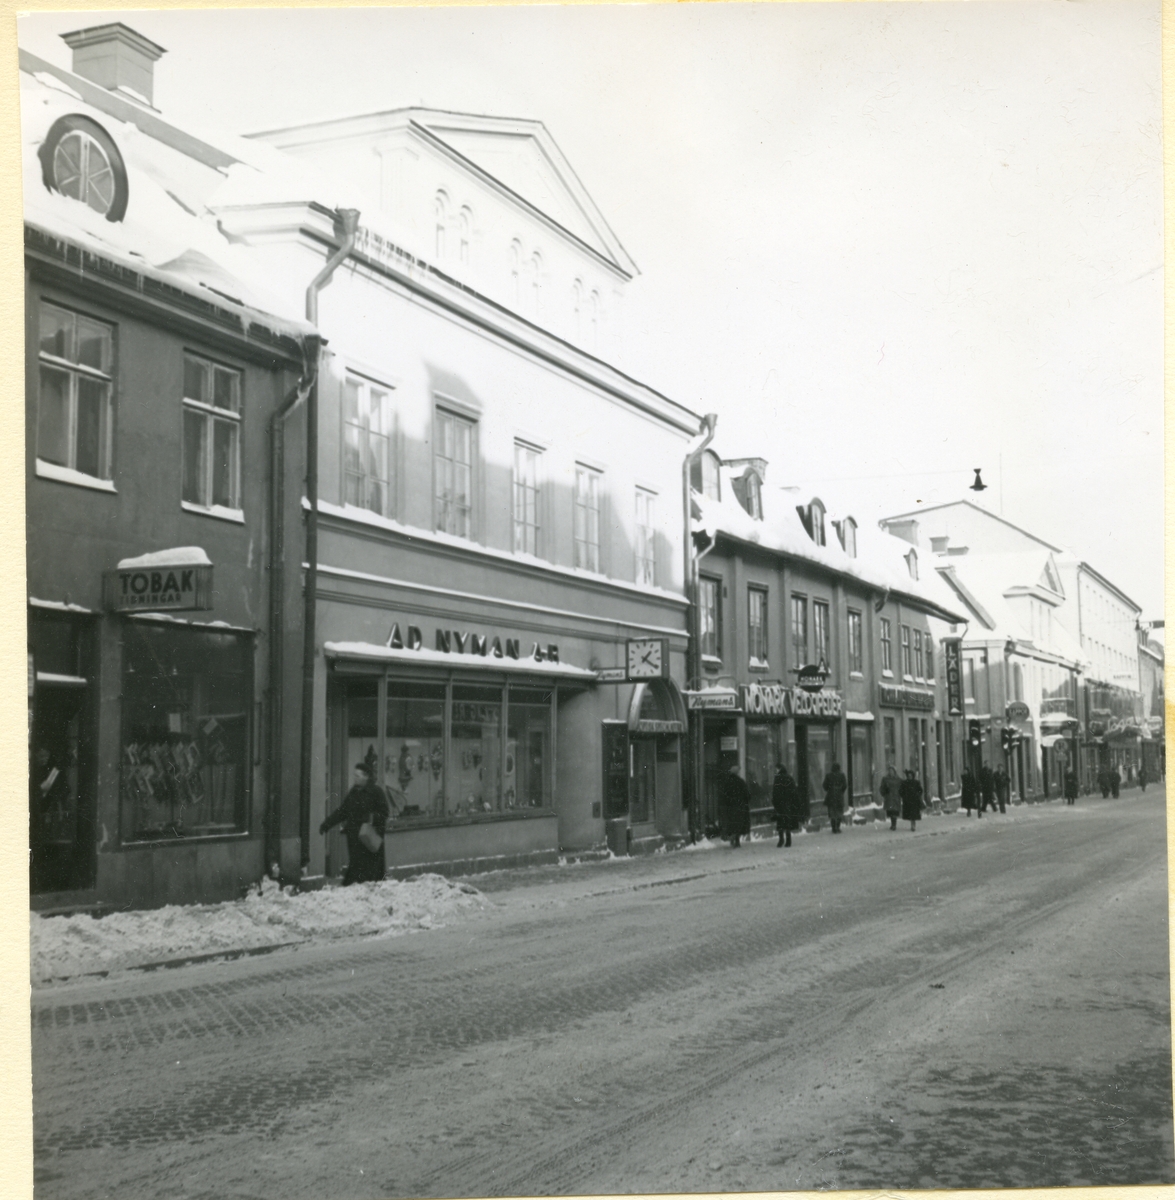 Västerås, kv. Lennart.
Nymans ur, Stora gatan mot öster, c:a 1940-1950-tal.